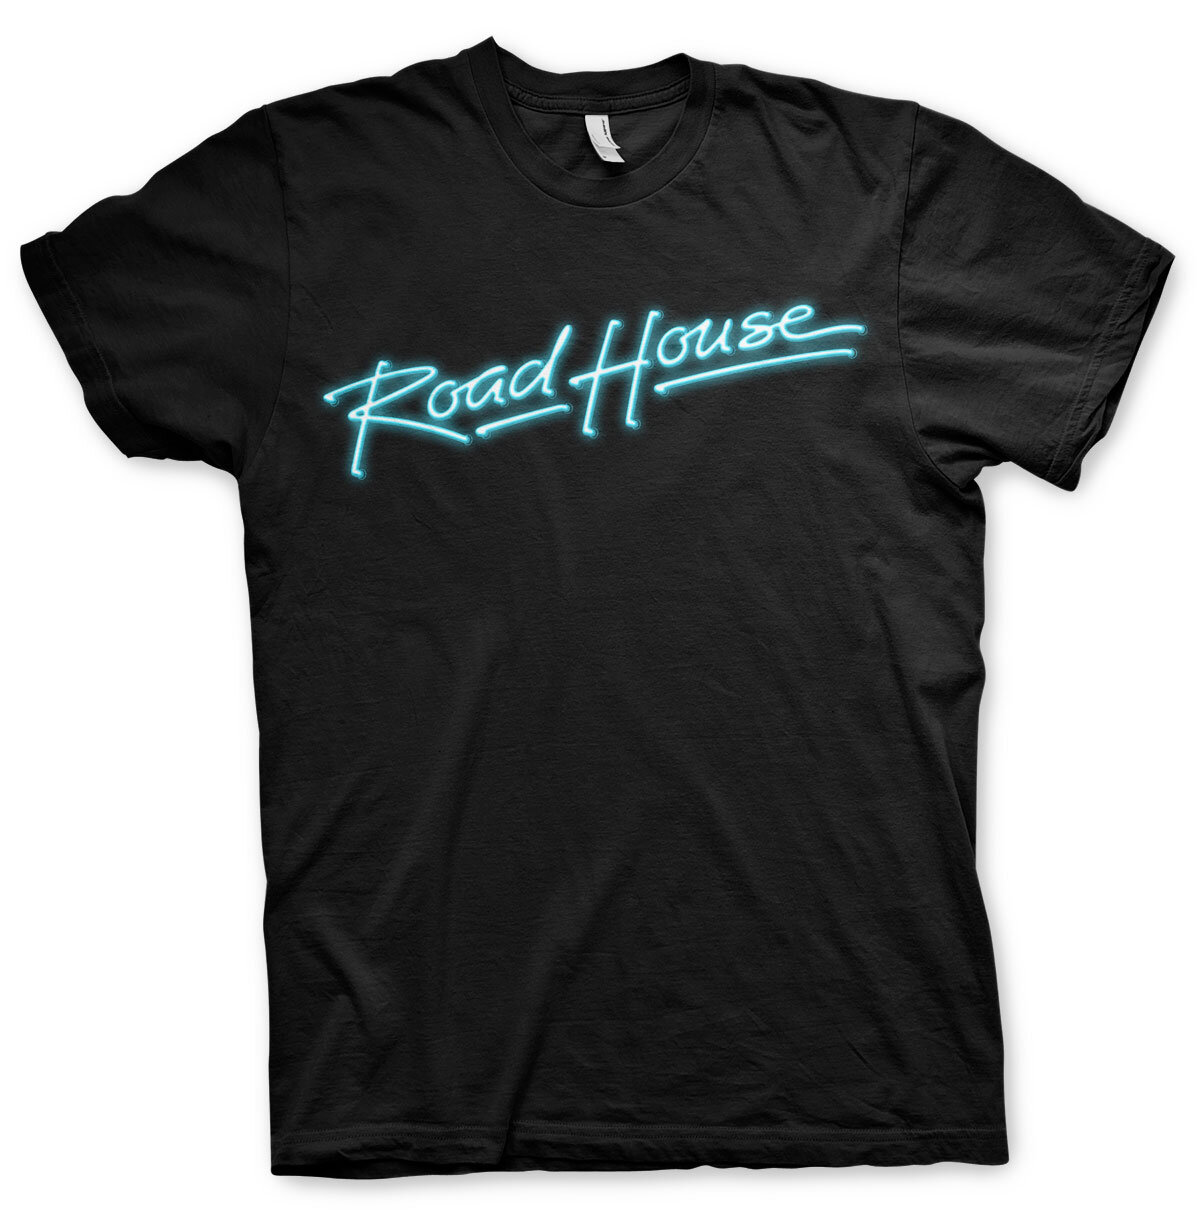 Road House Logo T-Shirt